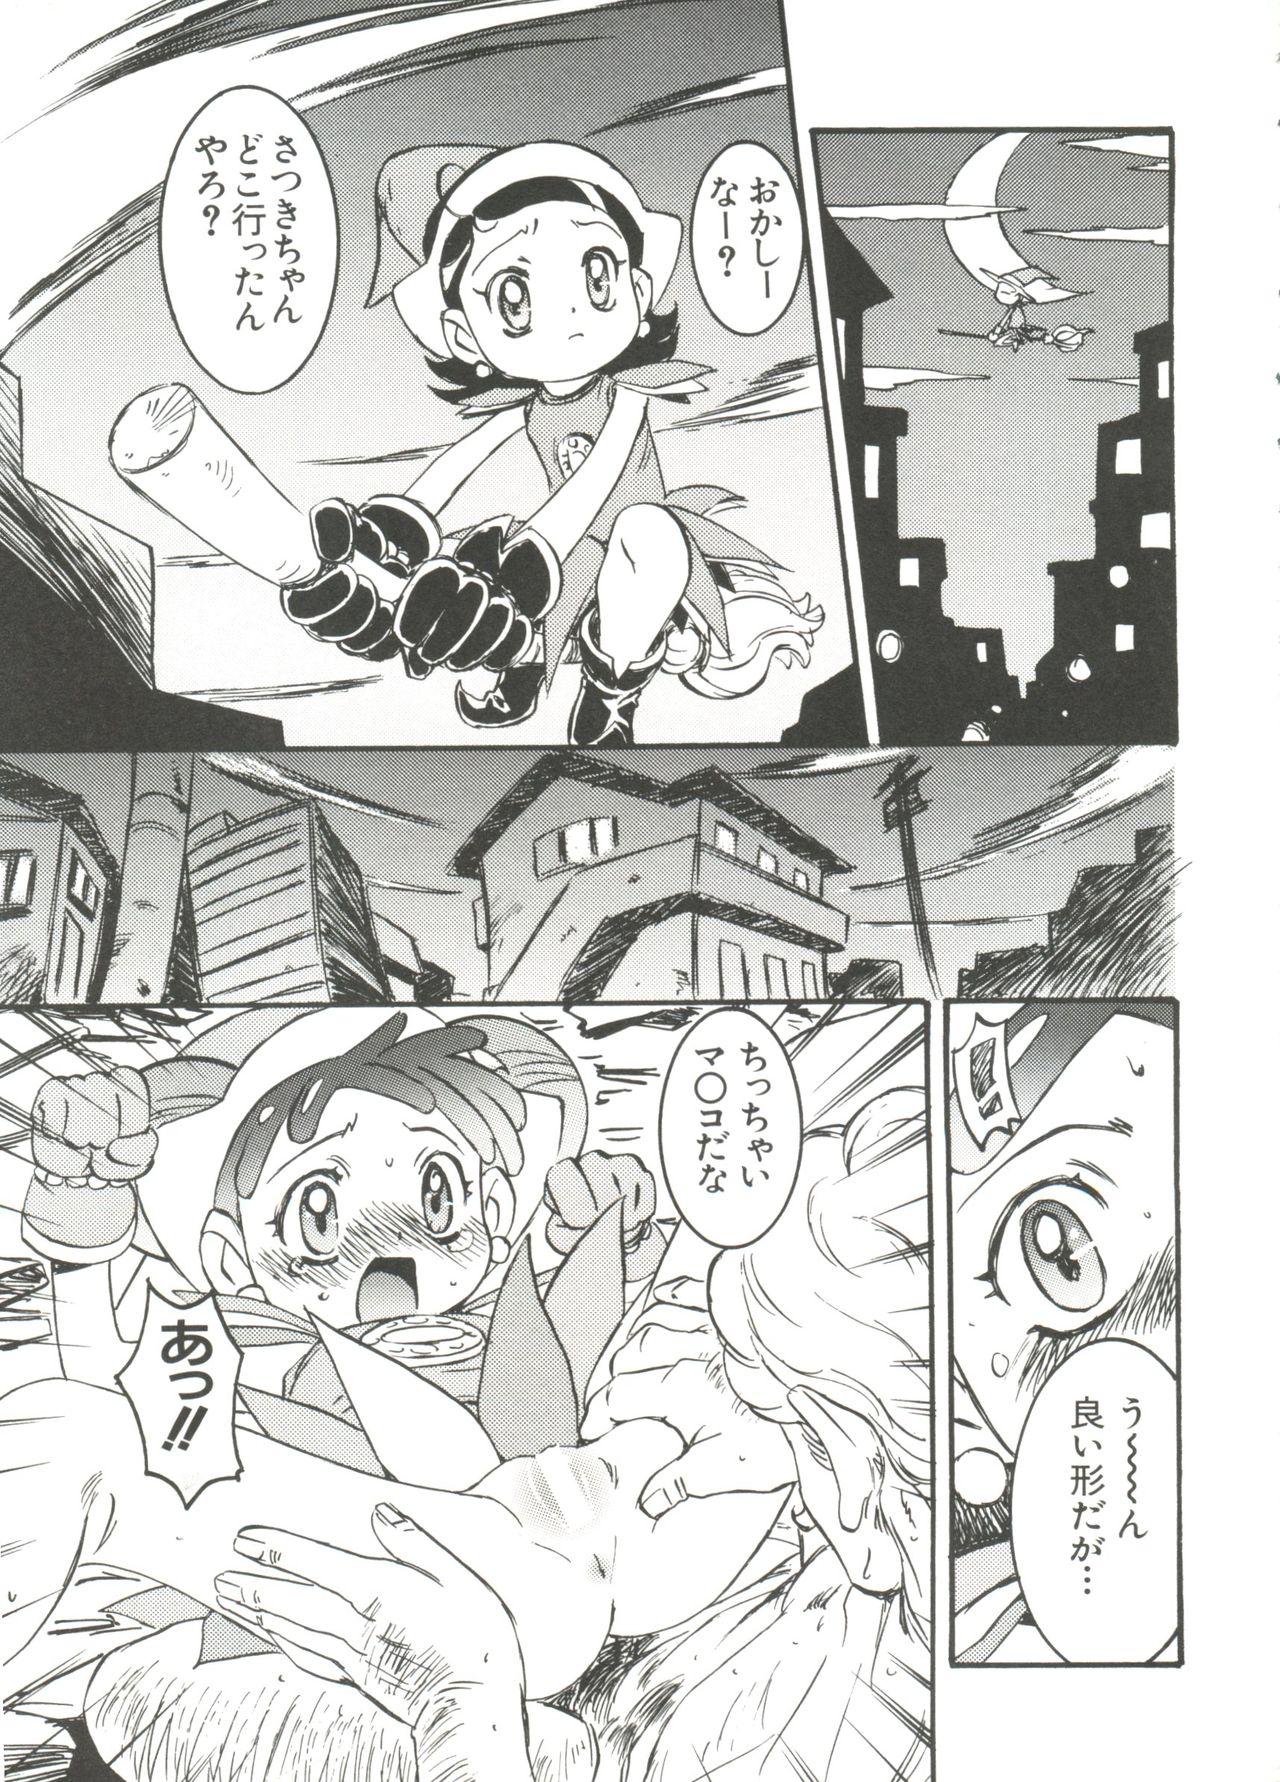 Pretty Love Chara Taizen No. 4 - Ojamajo doremi Tenchi muyo Love hina Detective conan Digimon adventure Betterman Agent aika Mahou tsukai tai Alien 9 Hardsex - Page 7